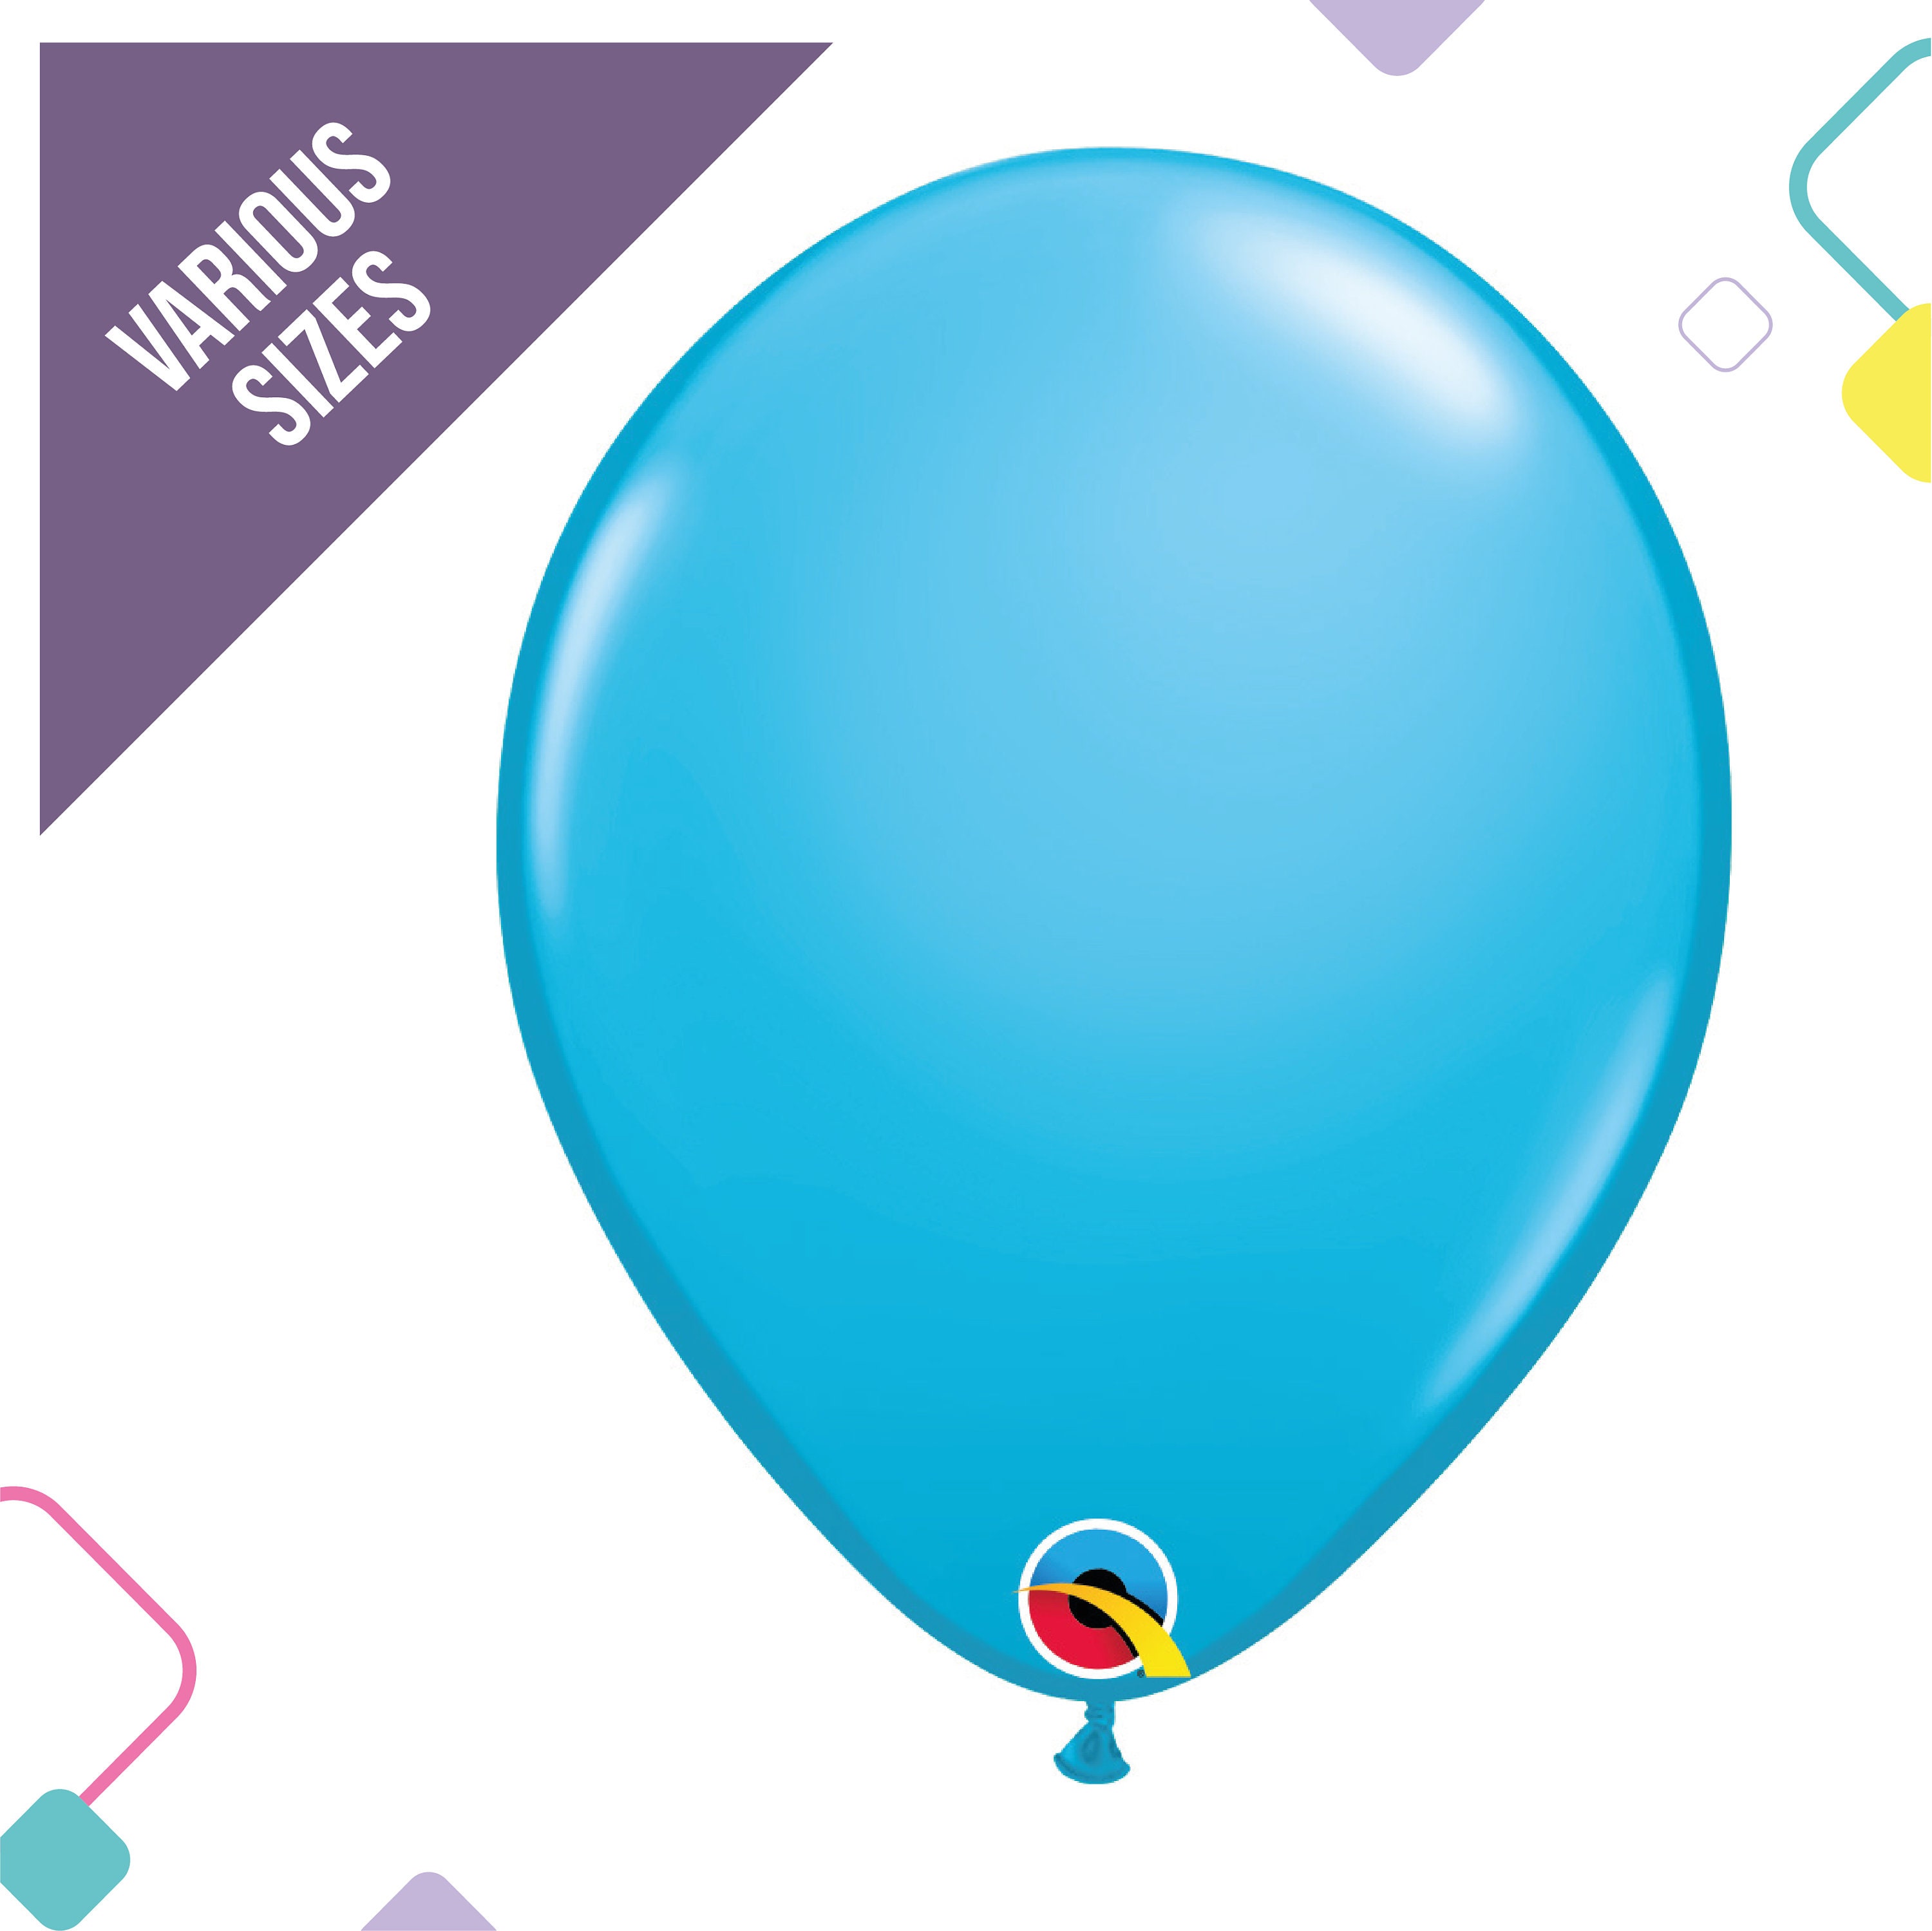 Kalisan Instant Balloon Shine Spray - 570ml, Balloon decorator accessories,  Balloon Pro spray, high shine